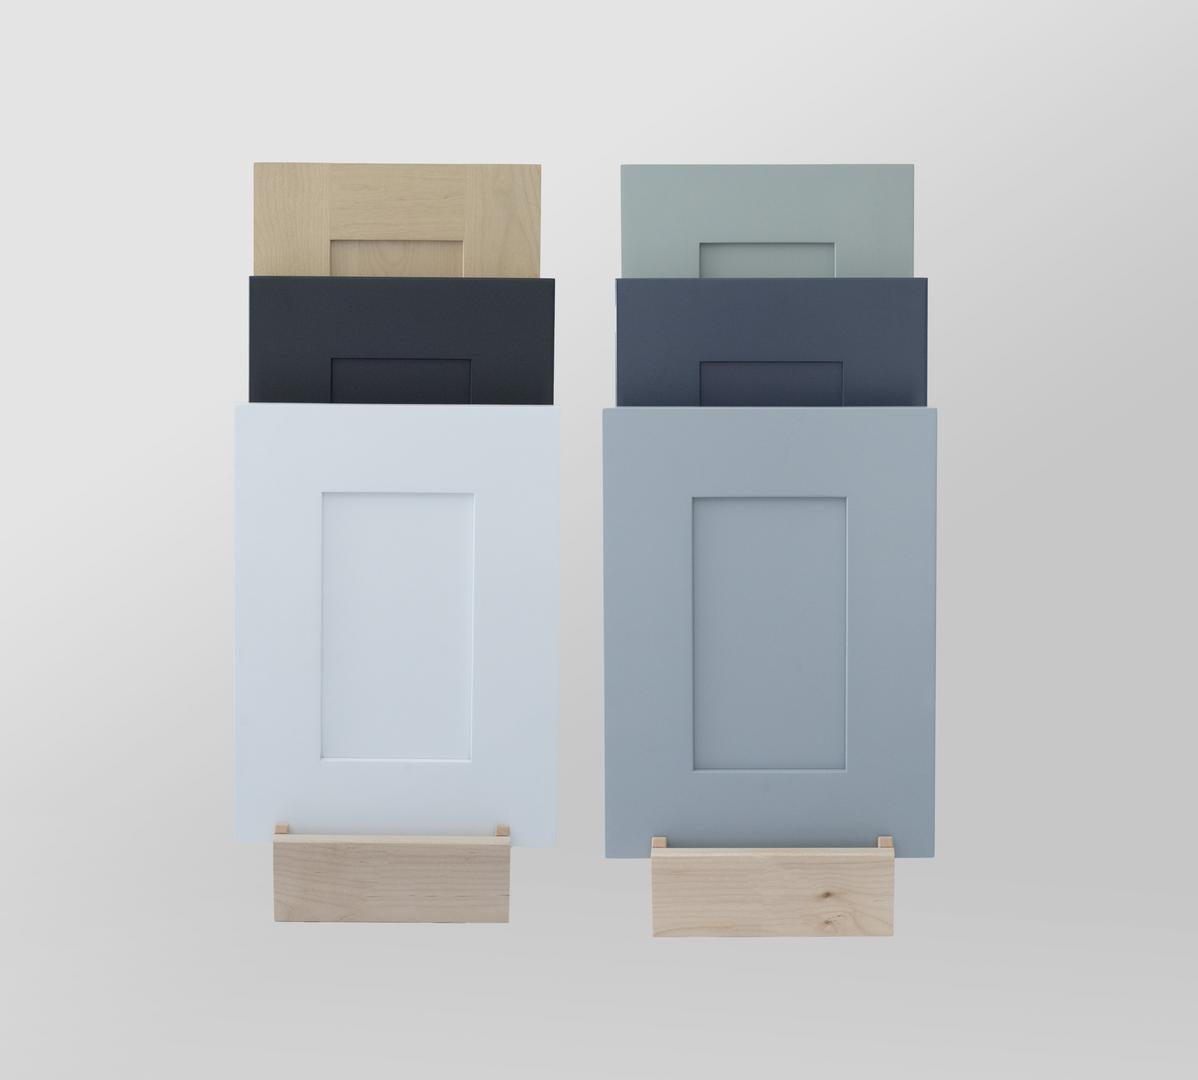 Shaker 42” H x 12” D Glass Door Wall Cabinet